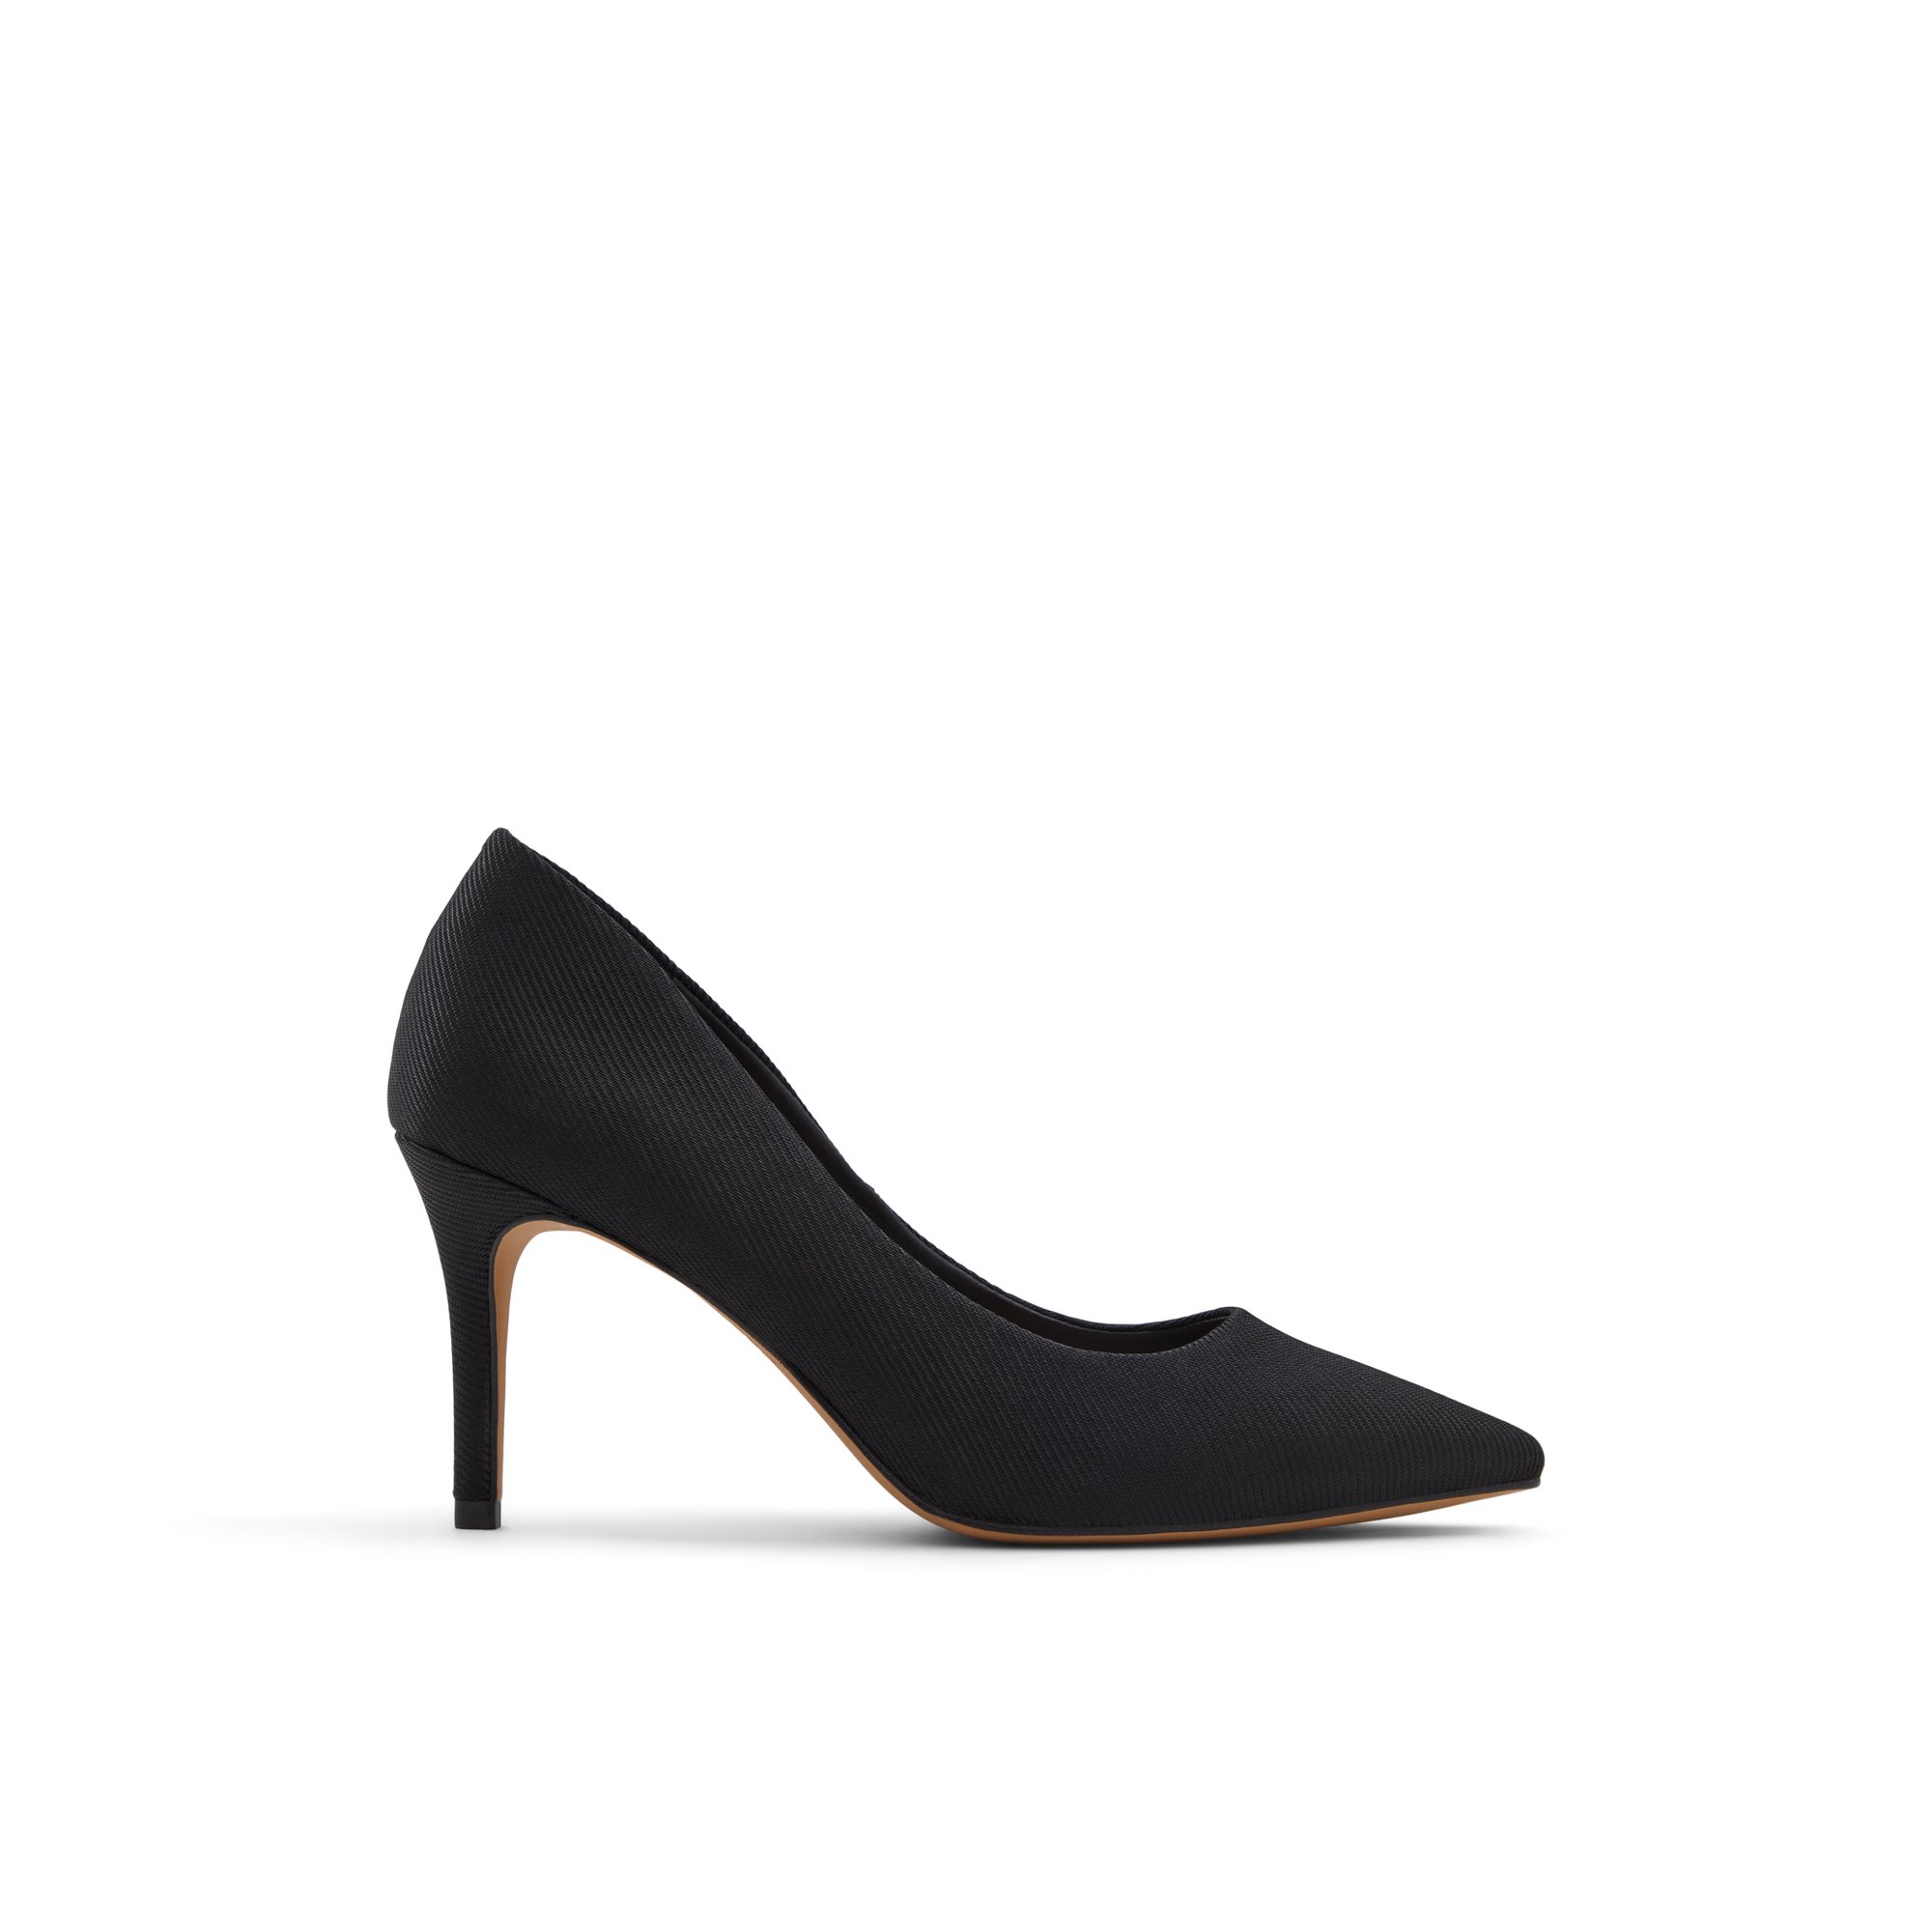 ALDO Sereniti - Women's Pump Heel - Black